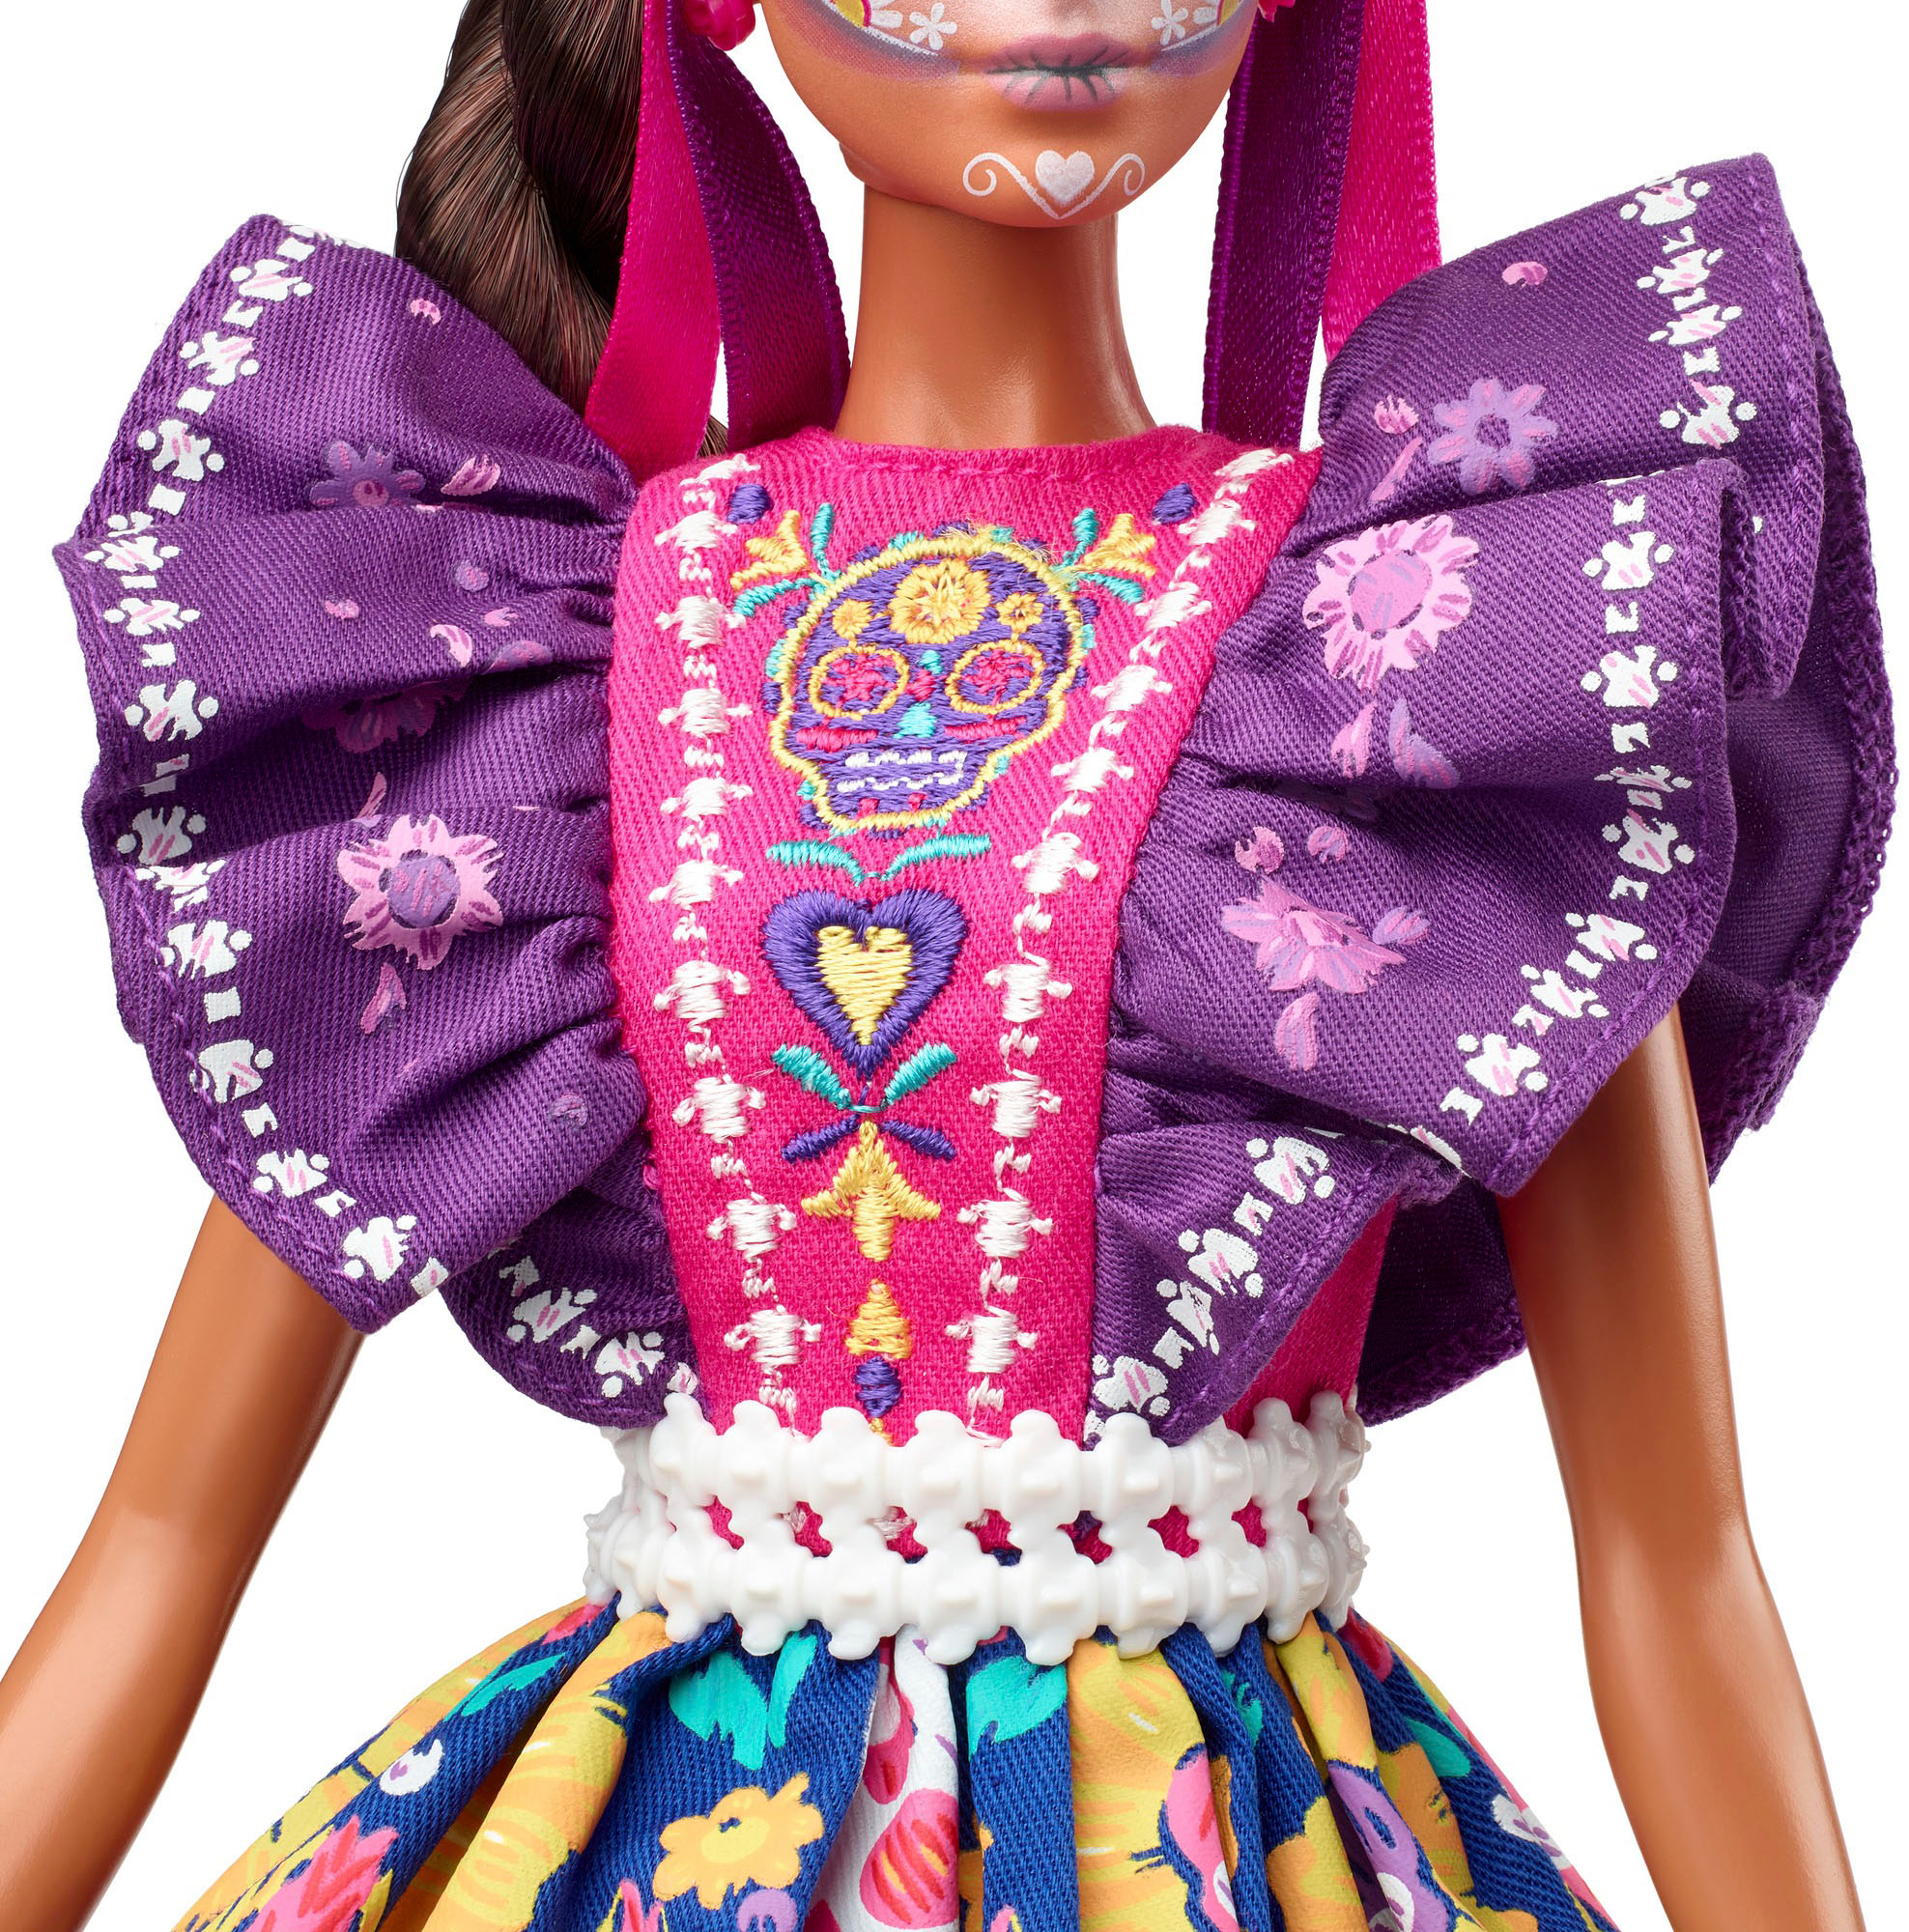 Barbie Signature Looks 11.5 Red Hair Doll HBX94 - Best Buy